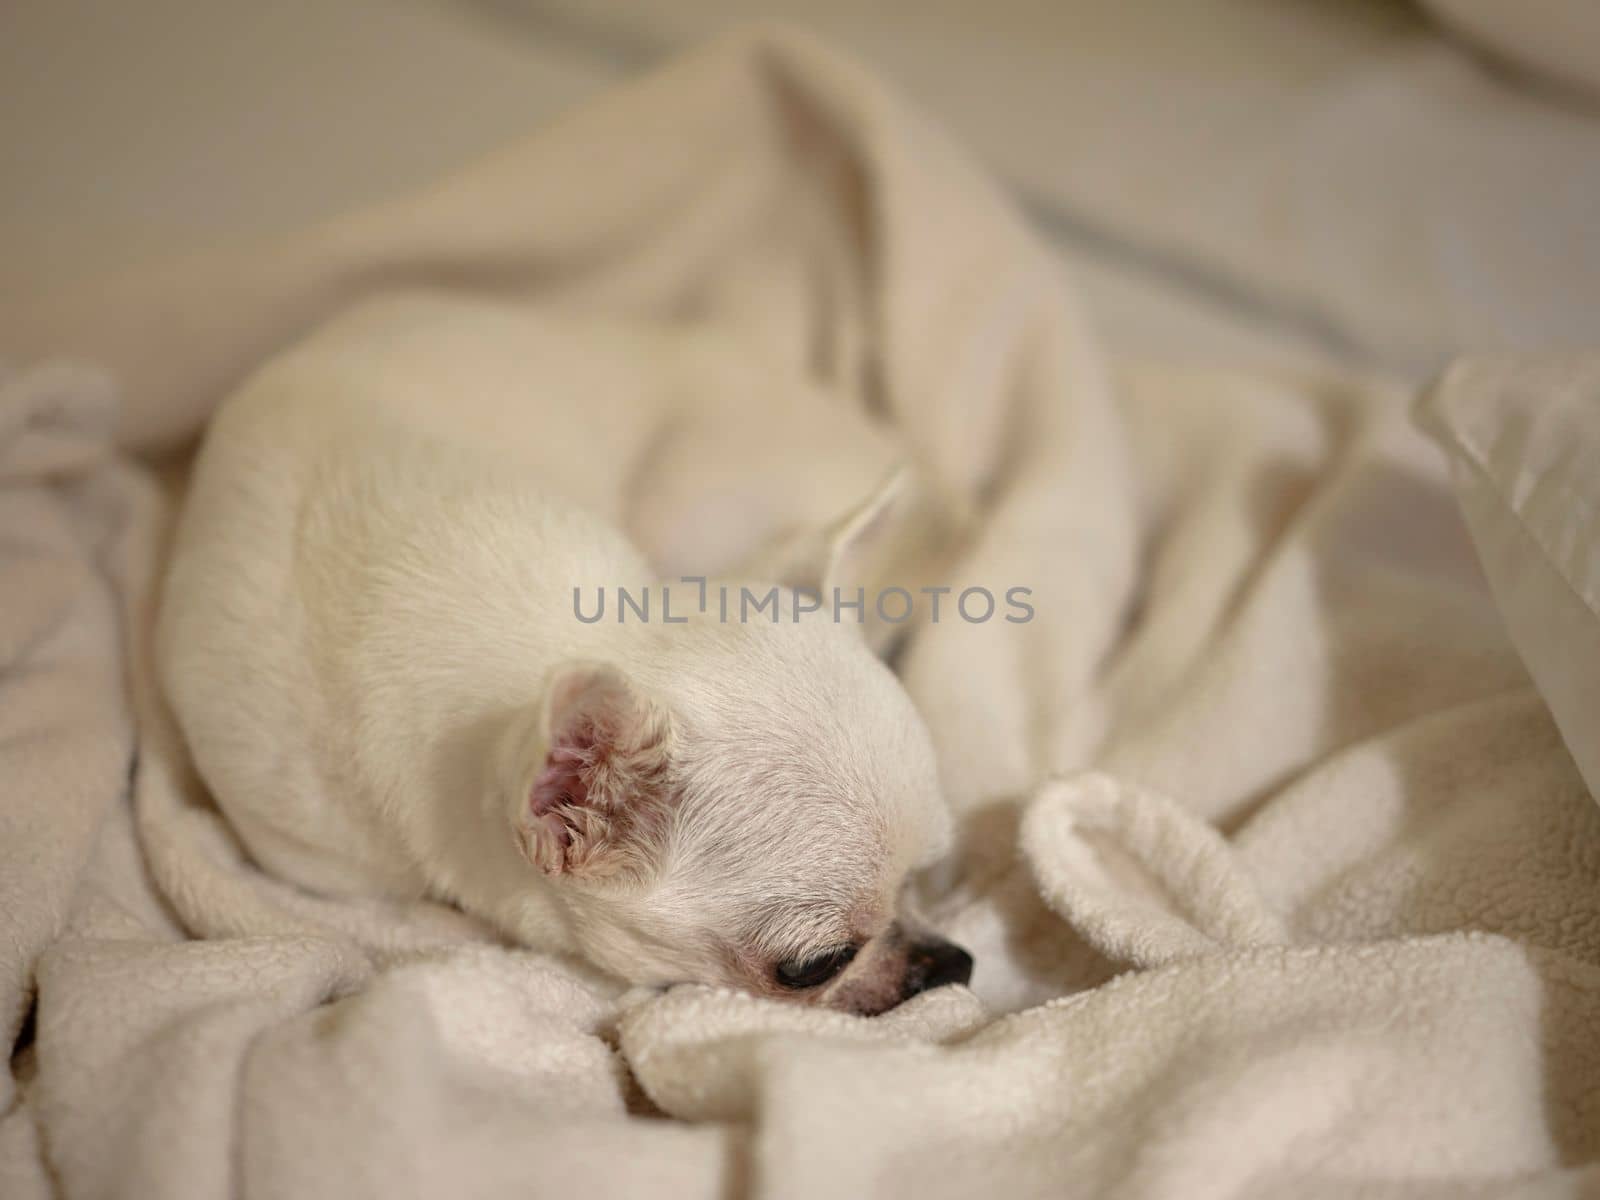 A cute chihuahua under blanket in bed dreaming sweet dreams . by Hepjam